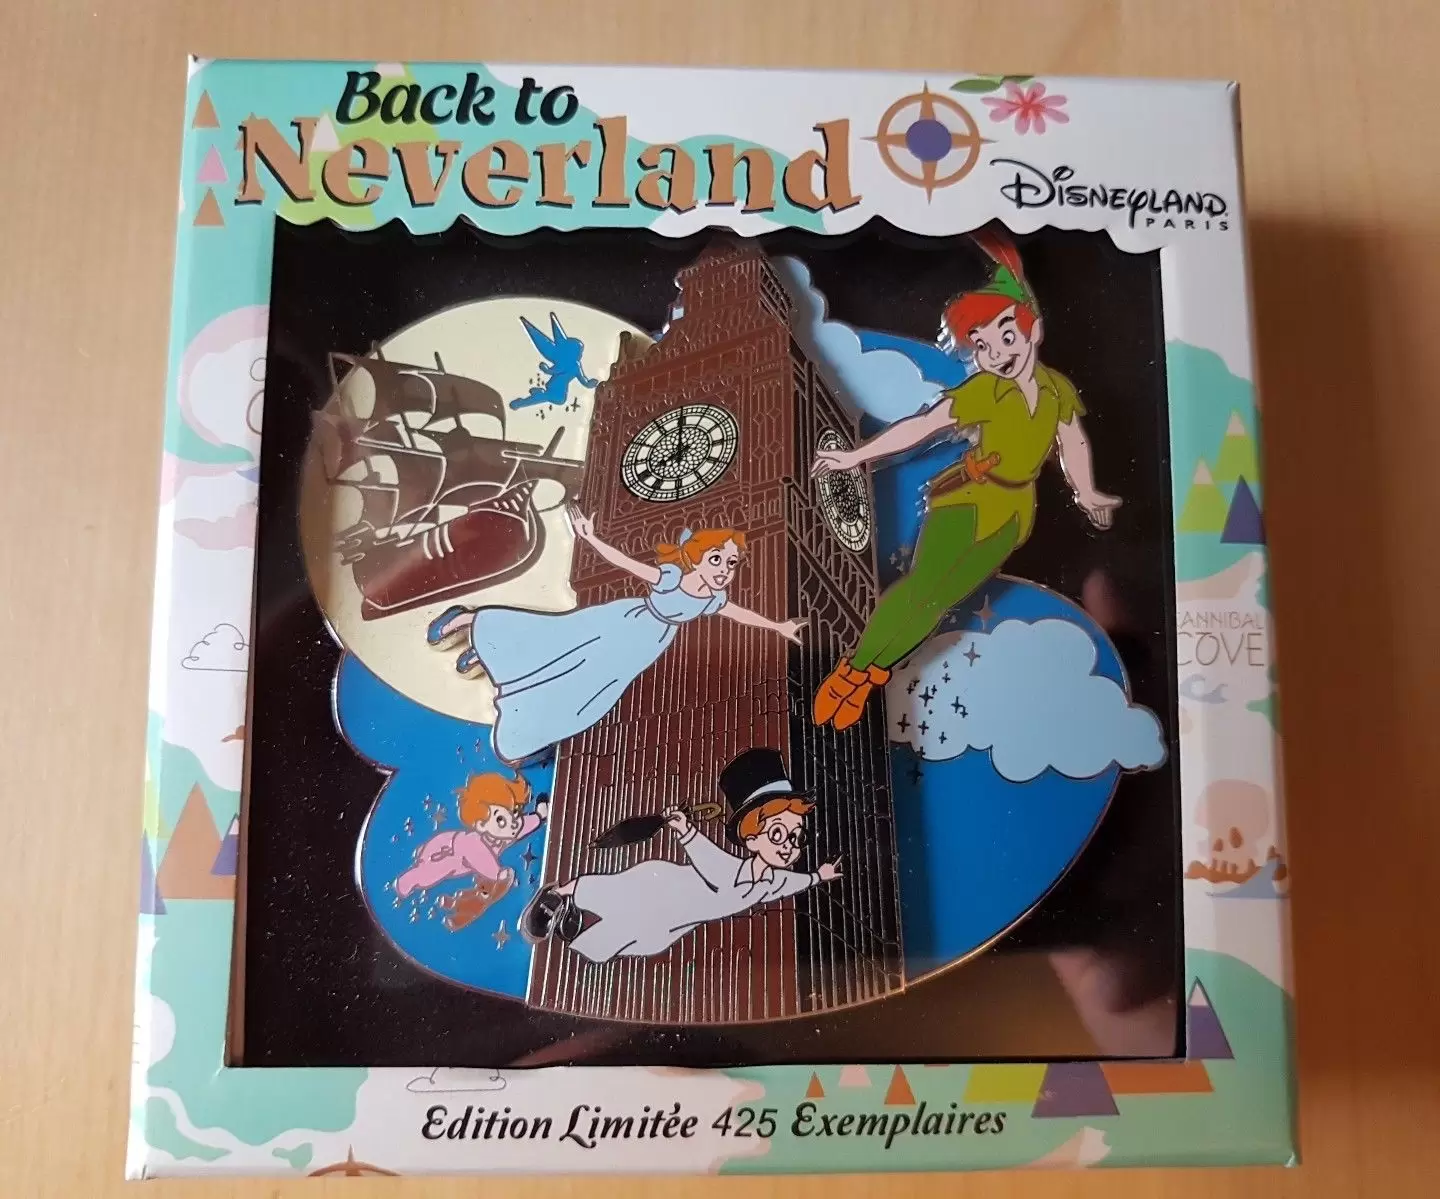 Back to Neverland - Back to Neverland Jumbo